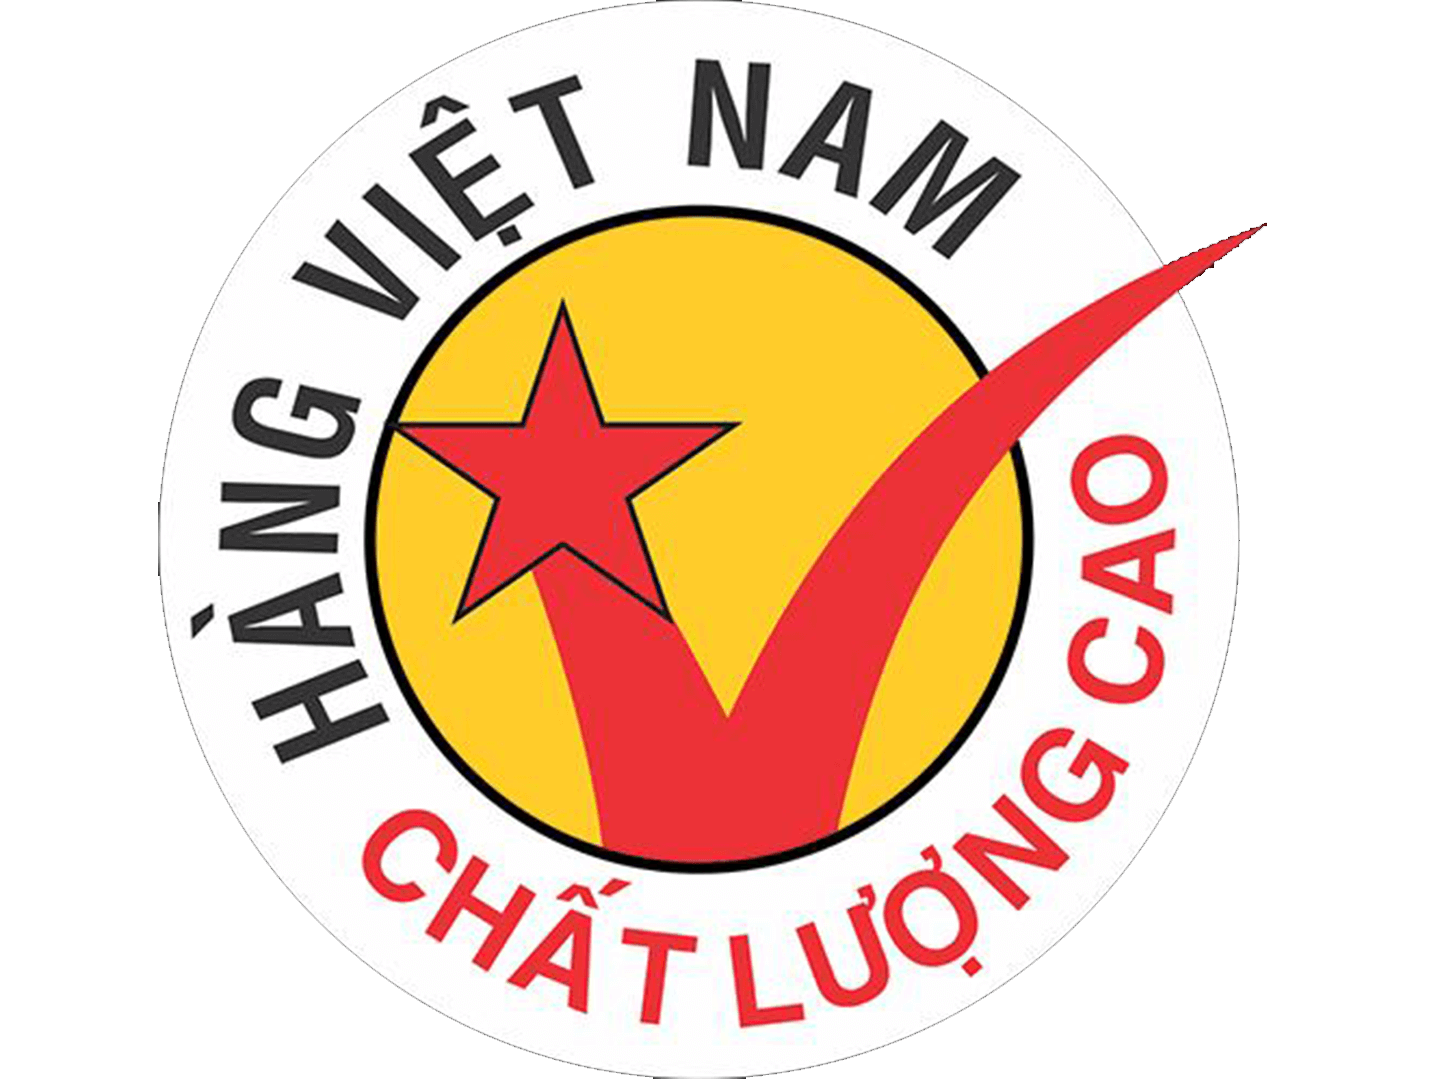 High Quality Vietnamese Goods 2017